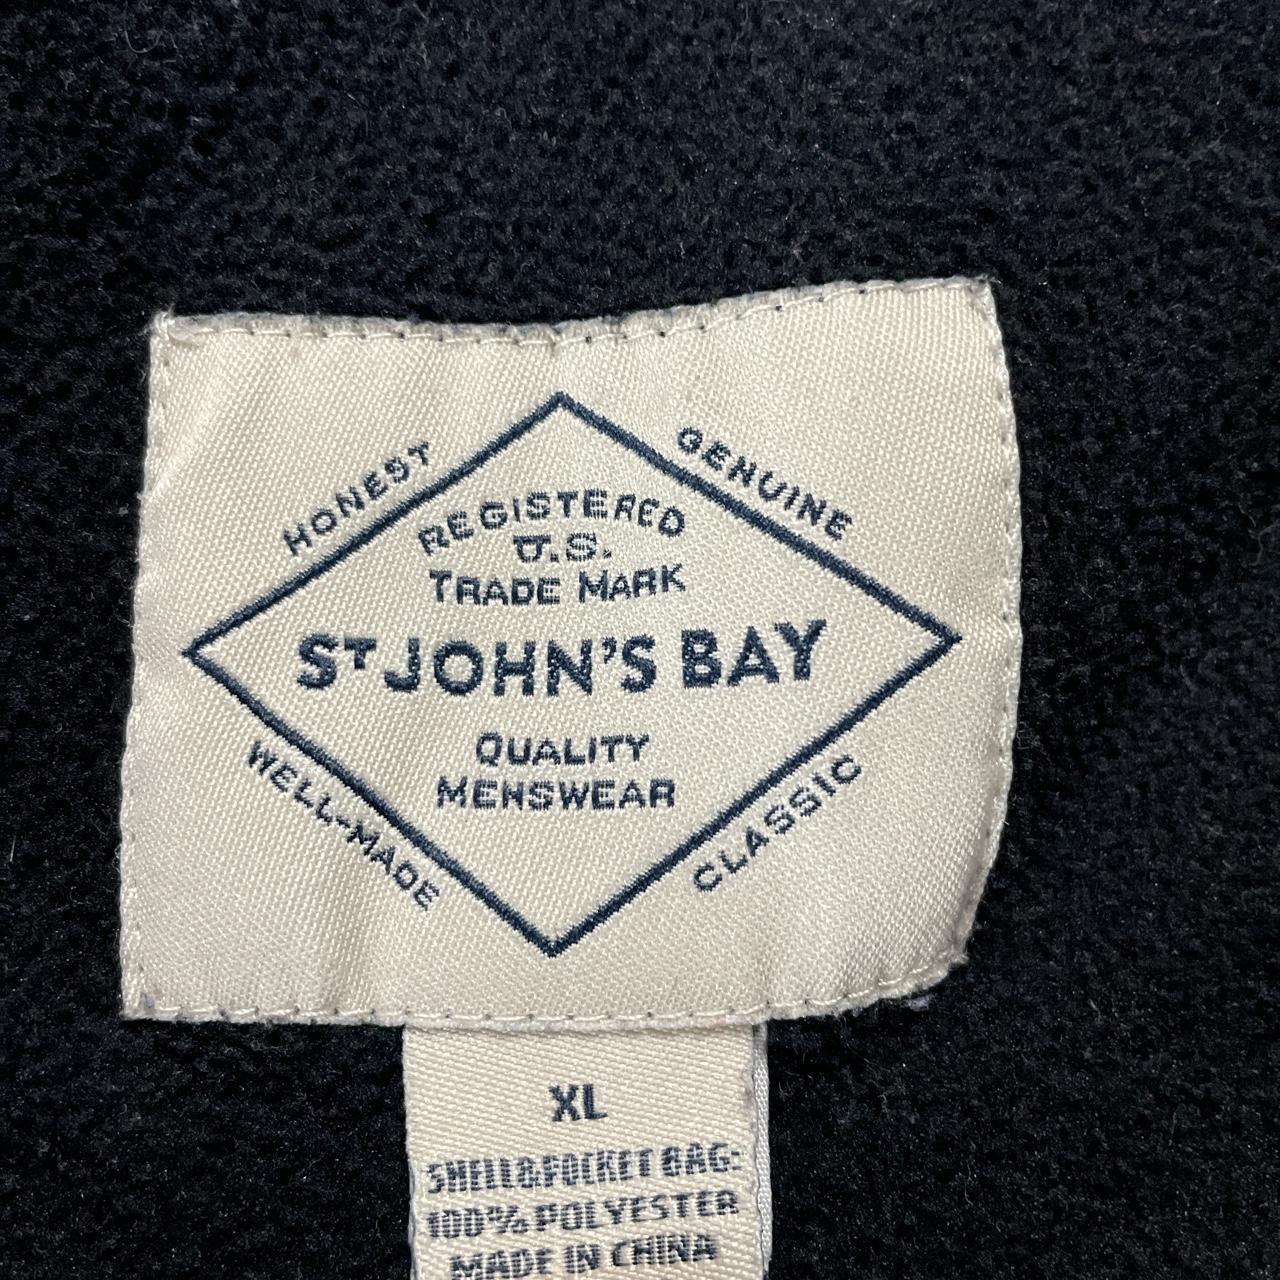 St John’s bay zip up XL fits like a L NO REFUNDS 🚫 - Depop